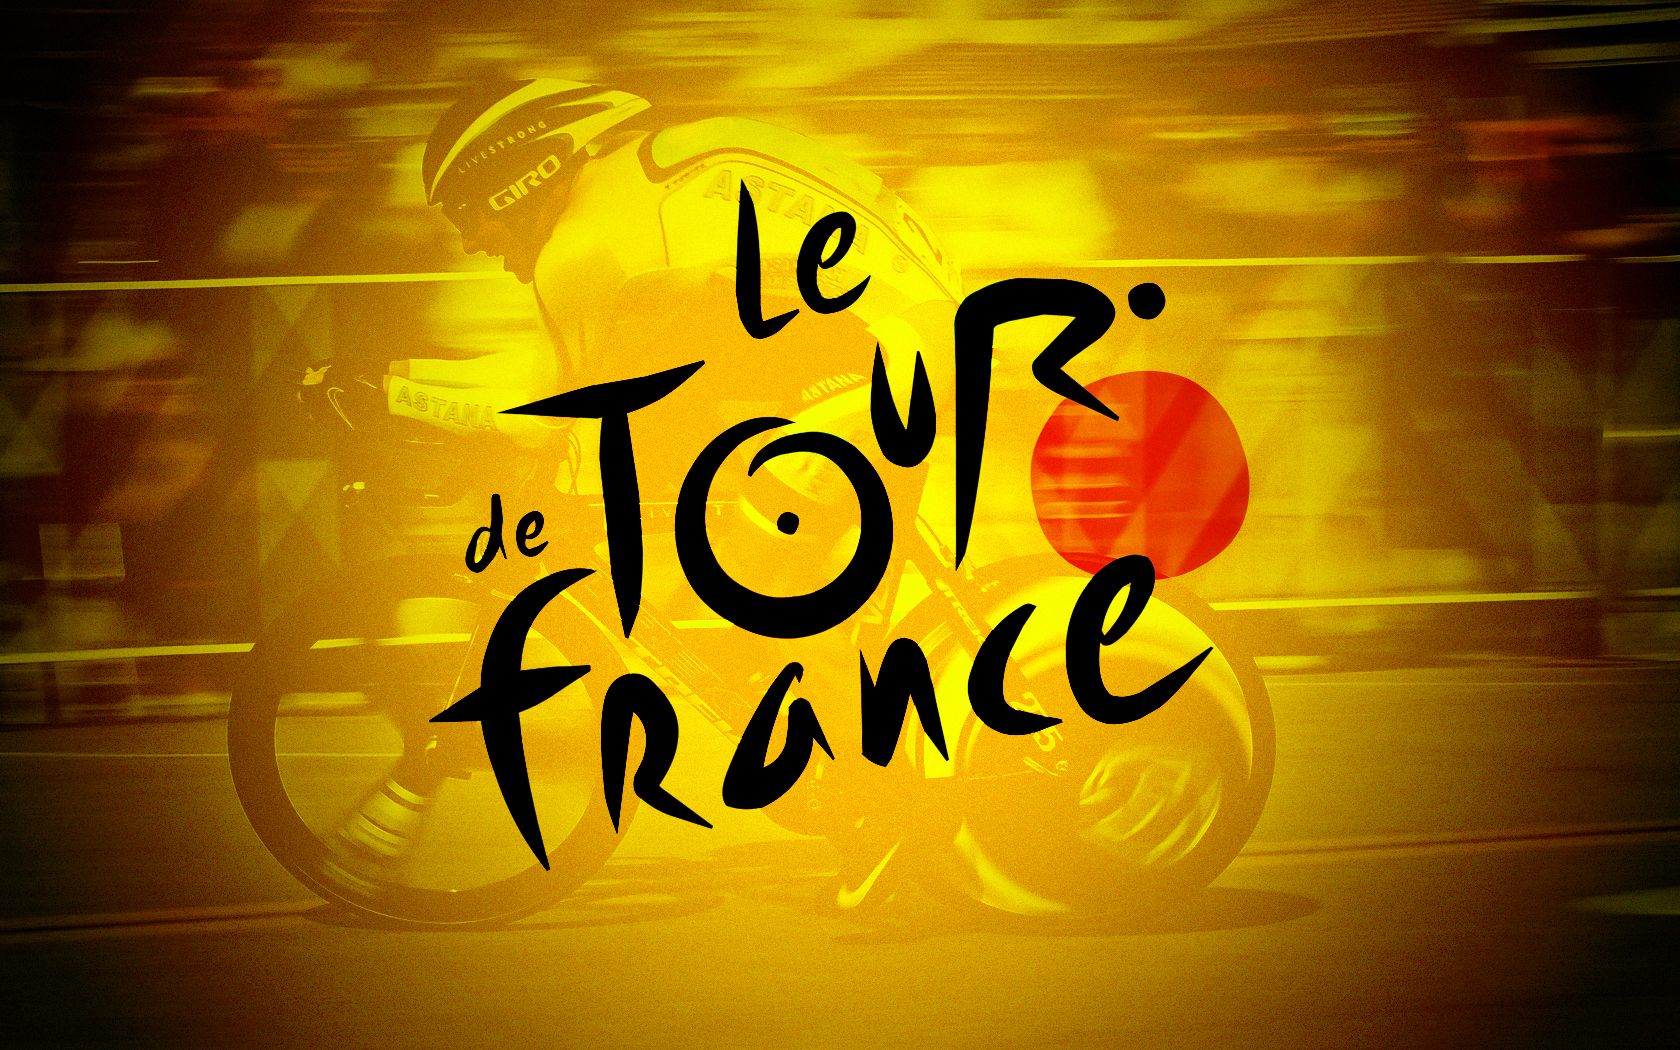 Tour de France Wallpaper by JohnnySlowhand on DeviantArt